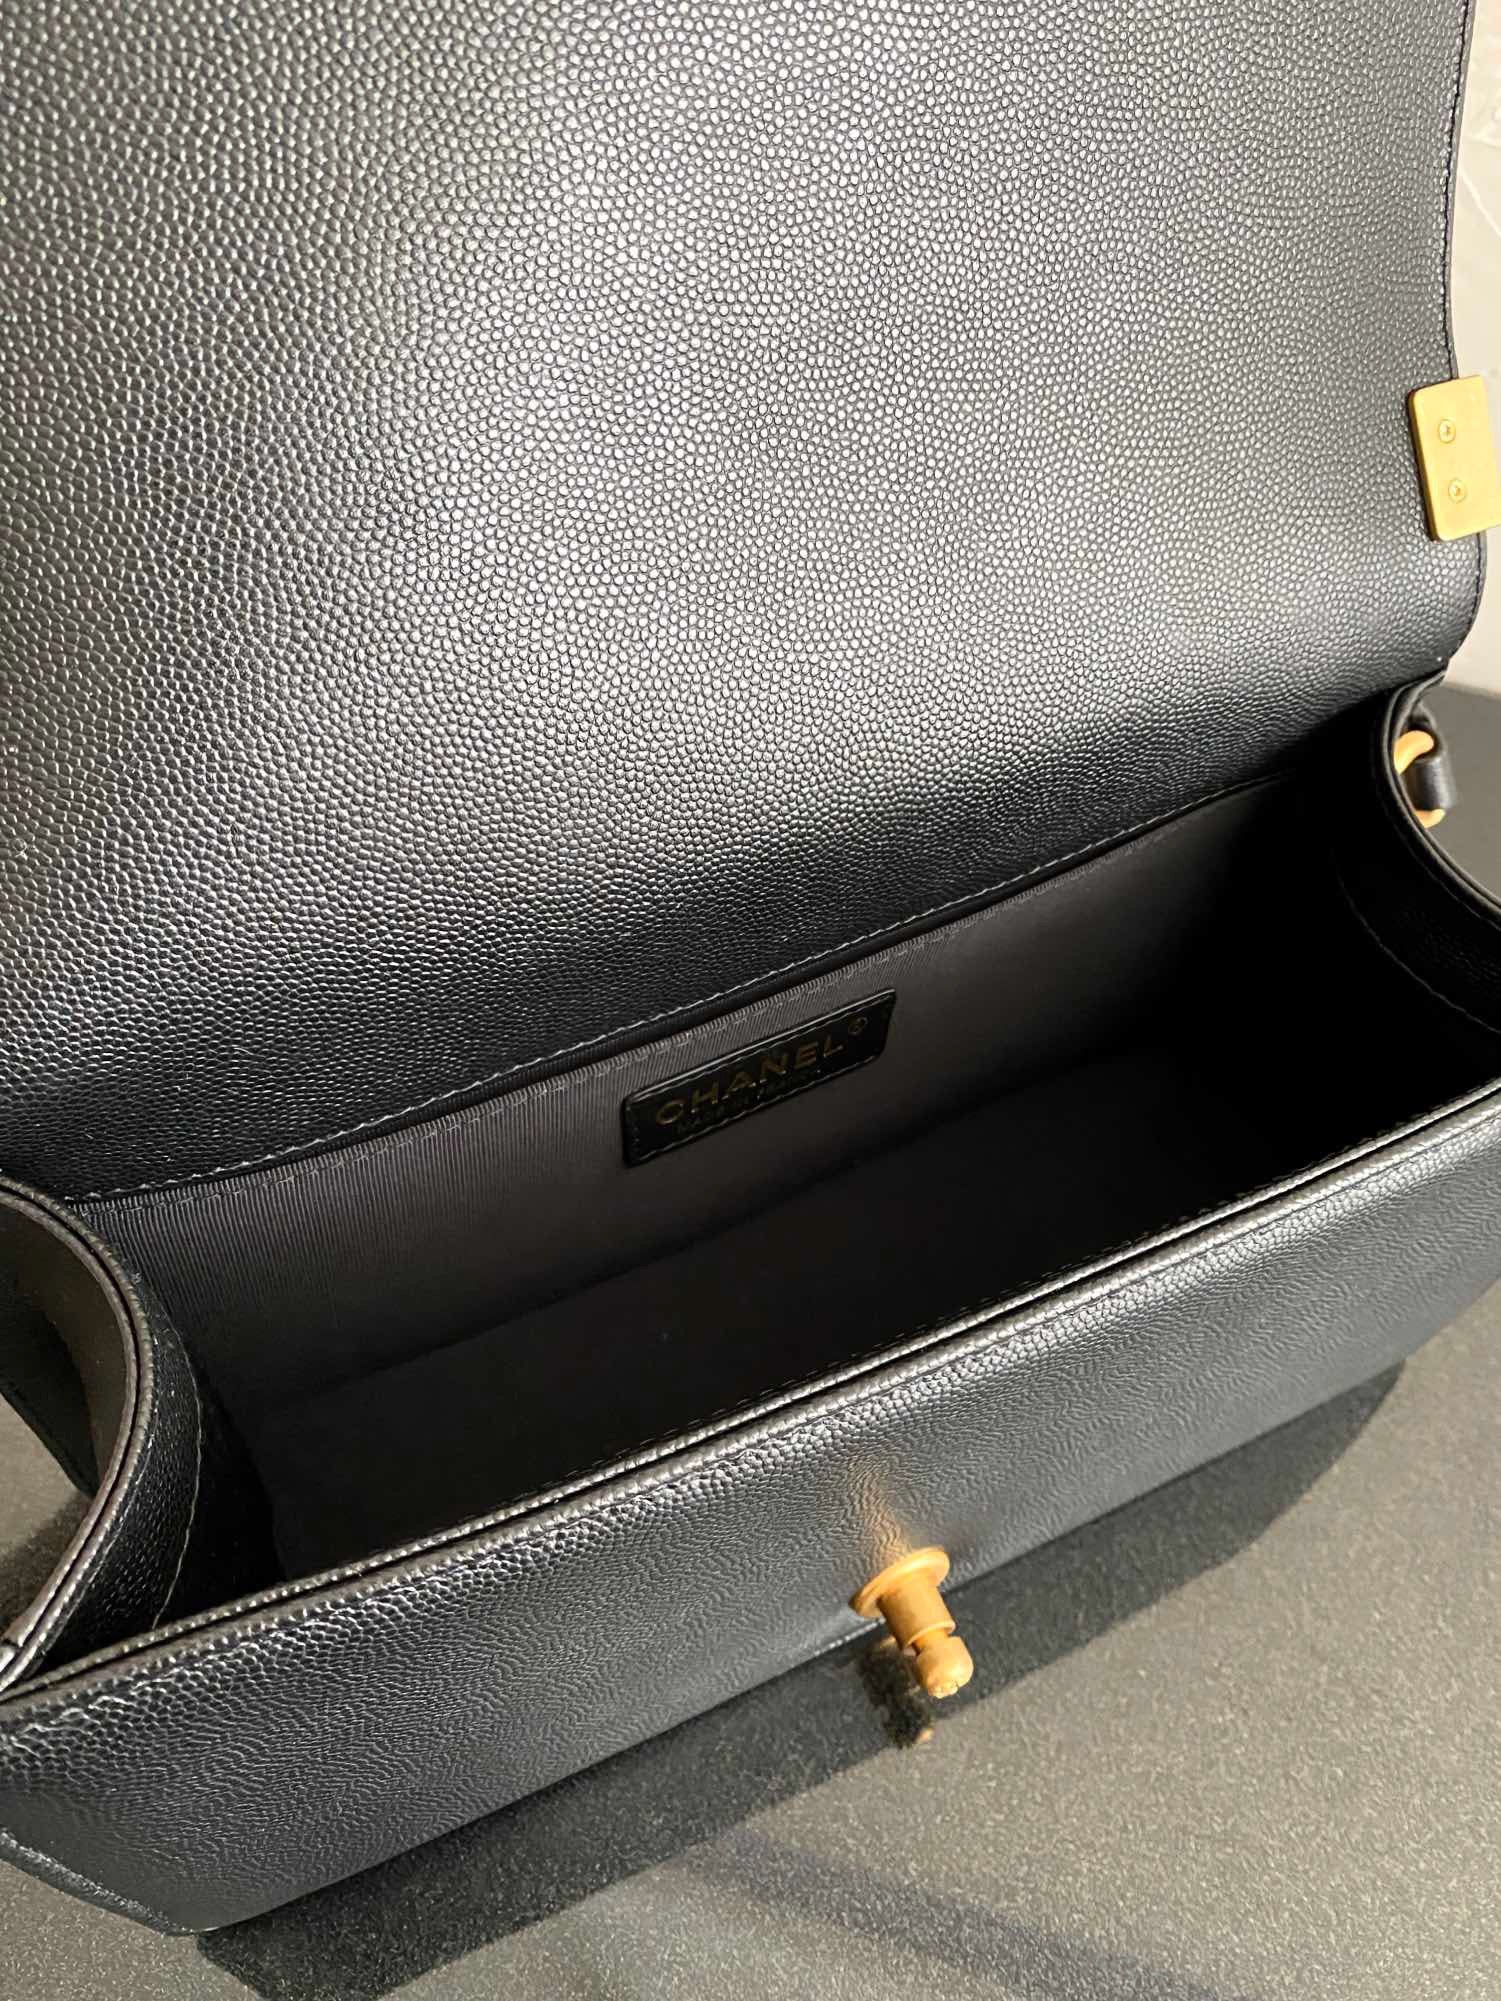 Inside of black boy chanel handbag